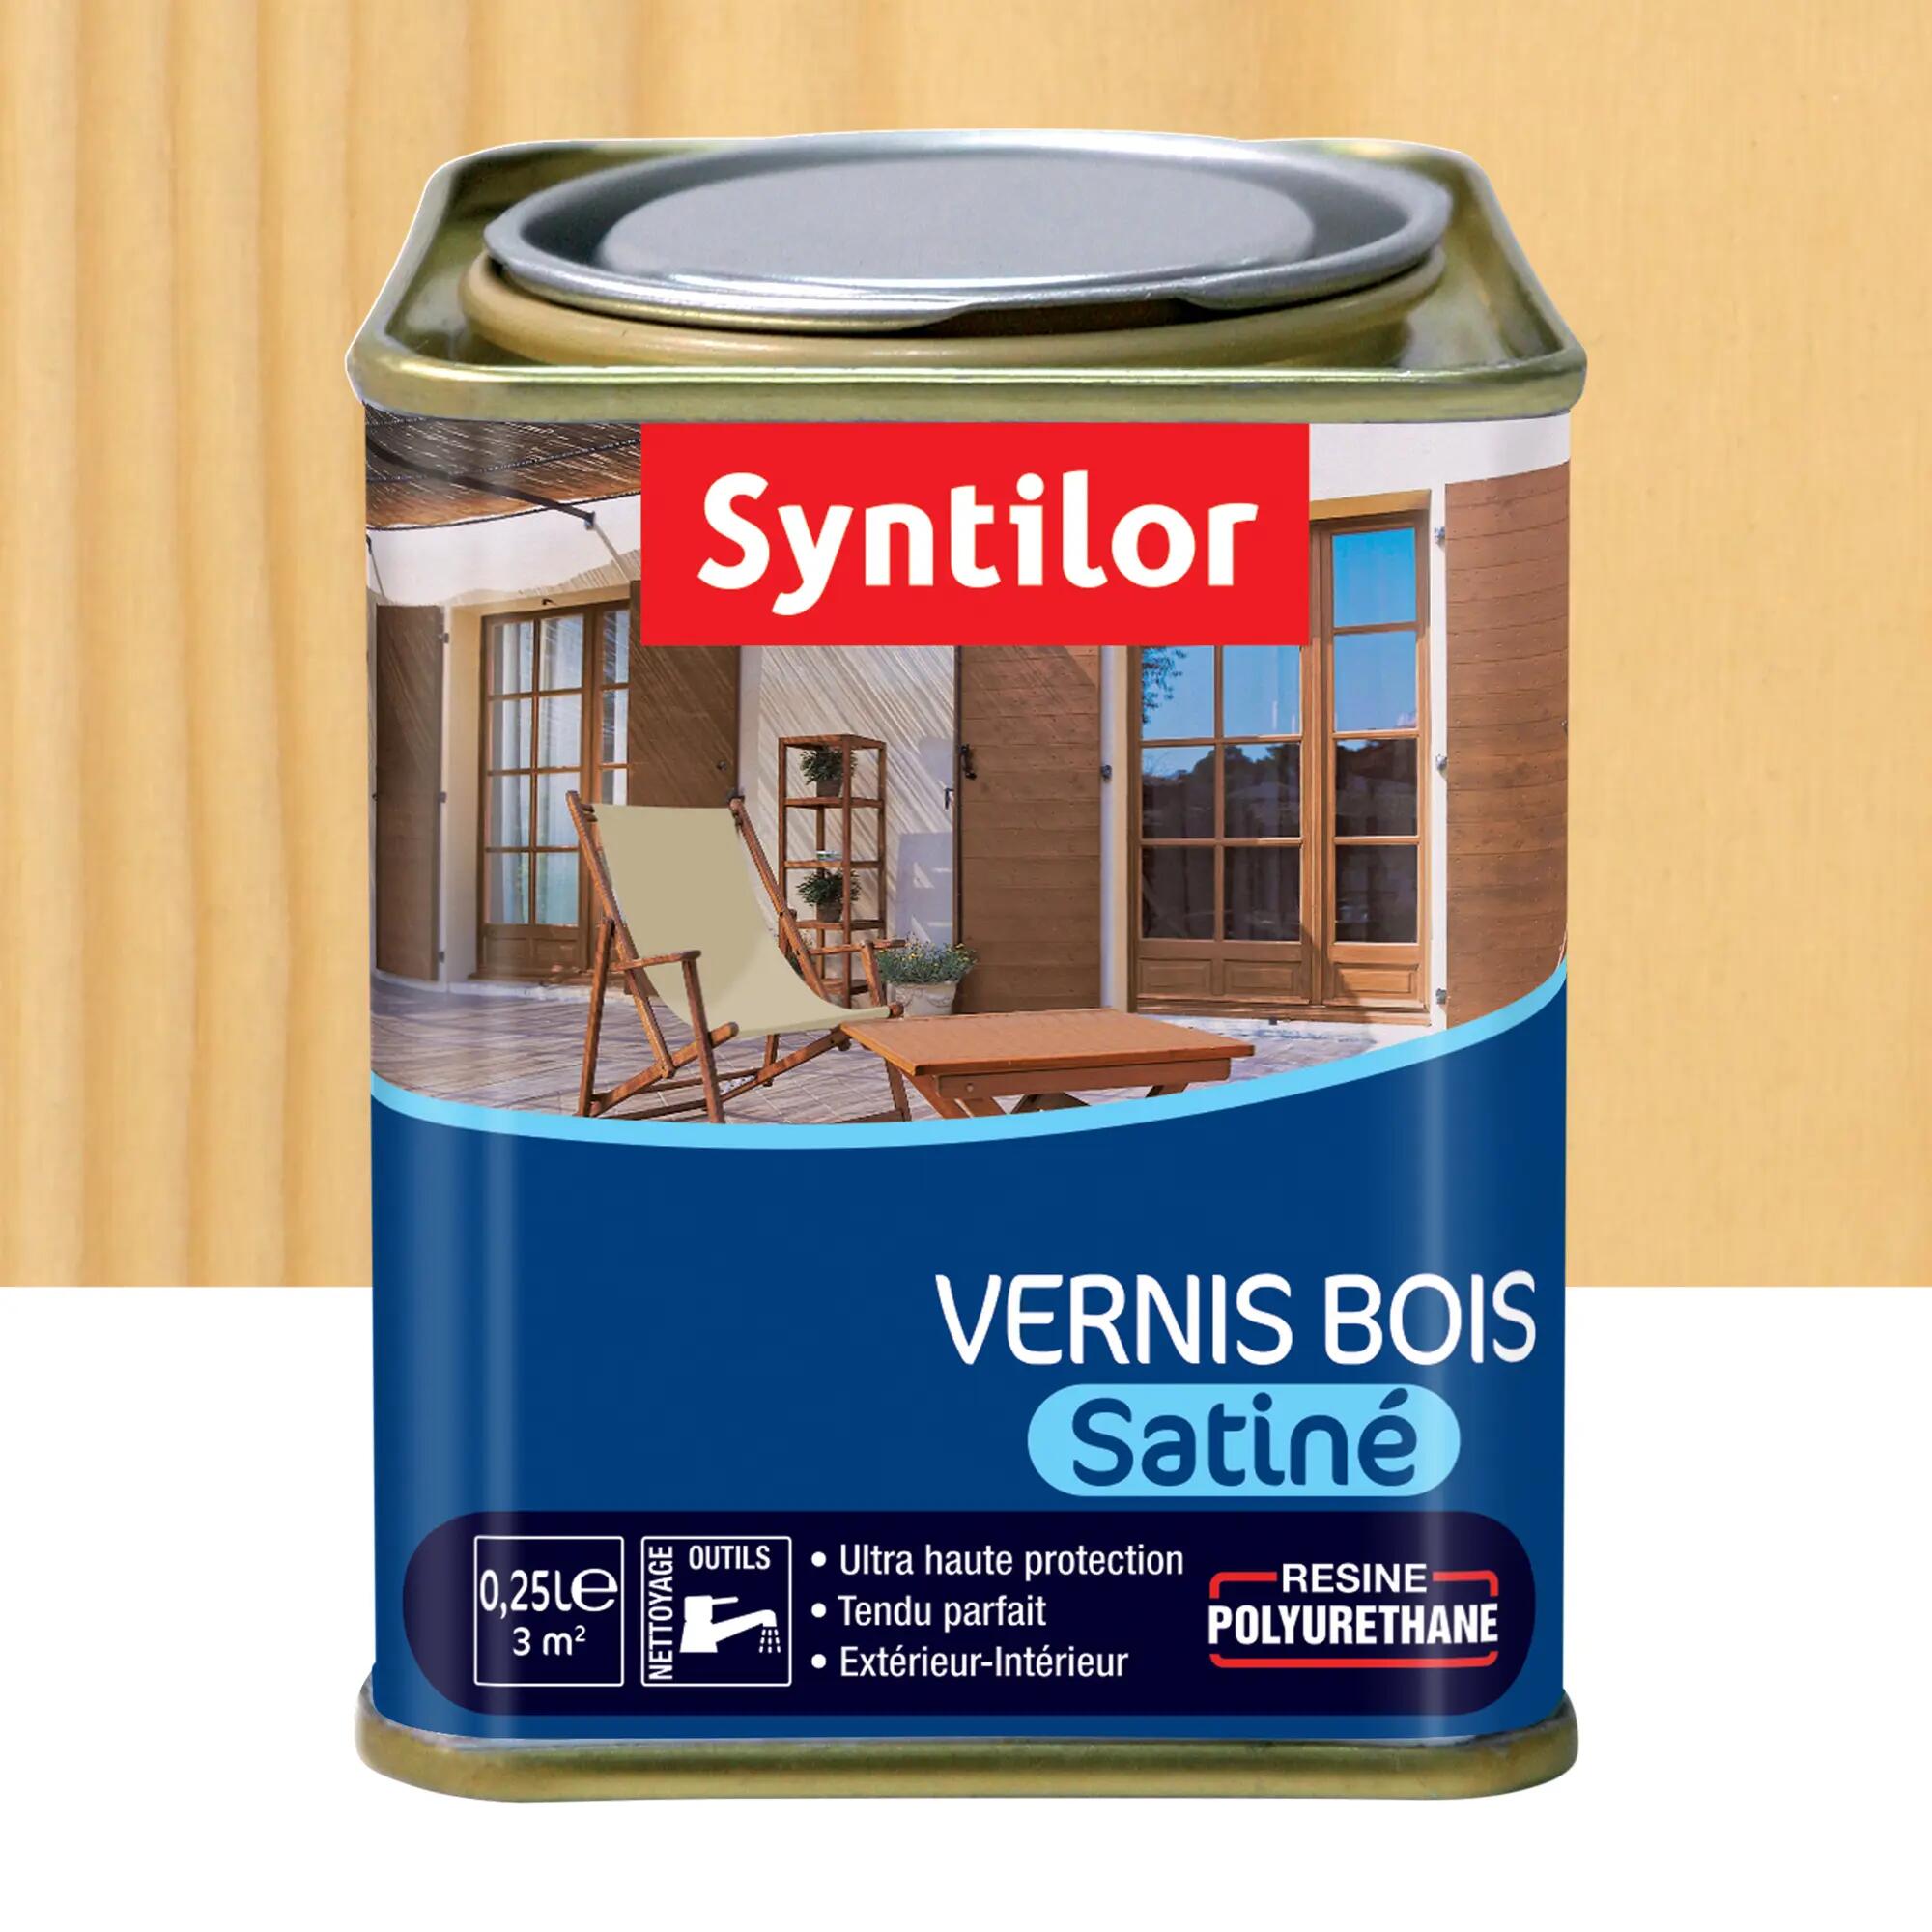 Syntilor - Vernis Marin Incolore Satiné 0,75L : : Bricolage